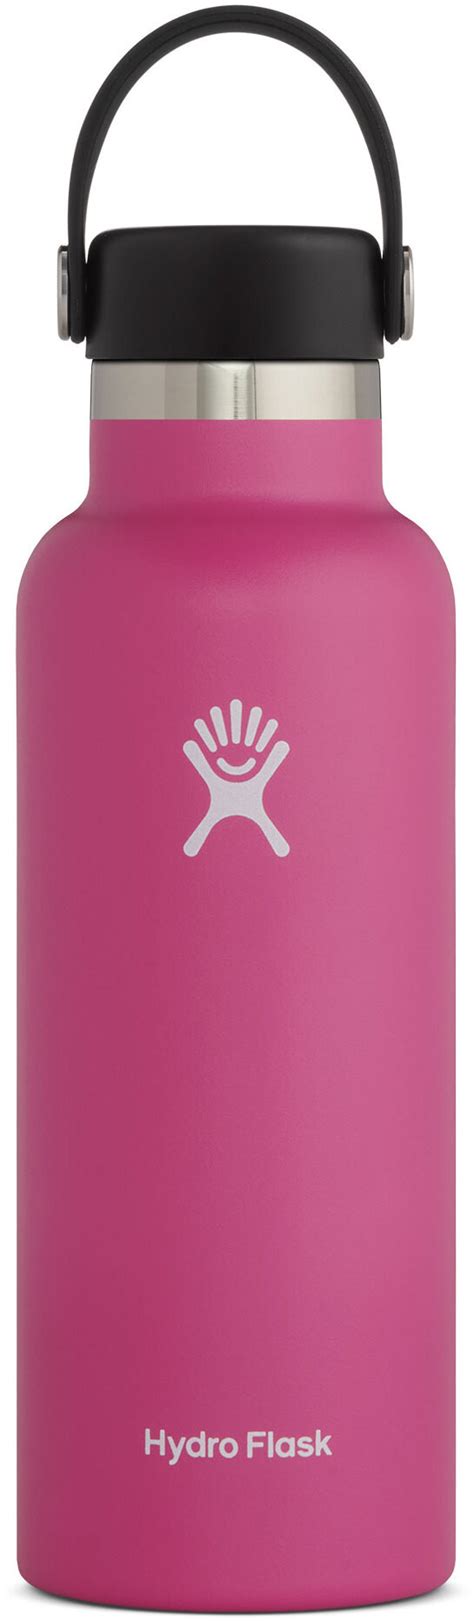 Hydro Flask Standard Mouth Flaske Med Standard Flex Cap 532ml Pink Find Outdoortøj Sko